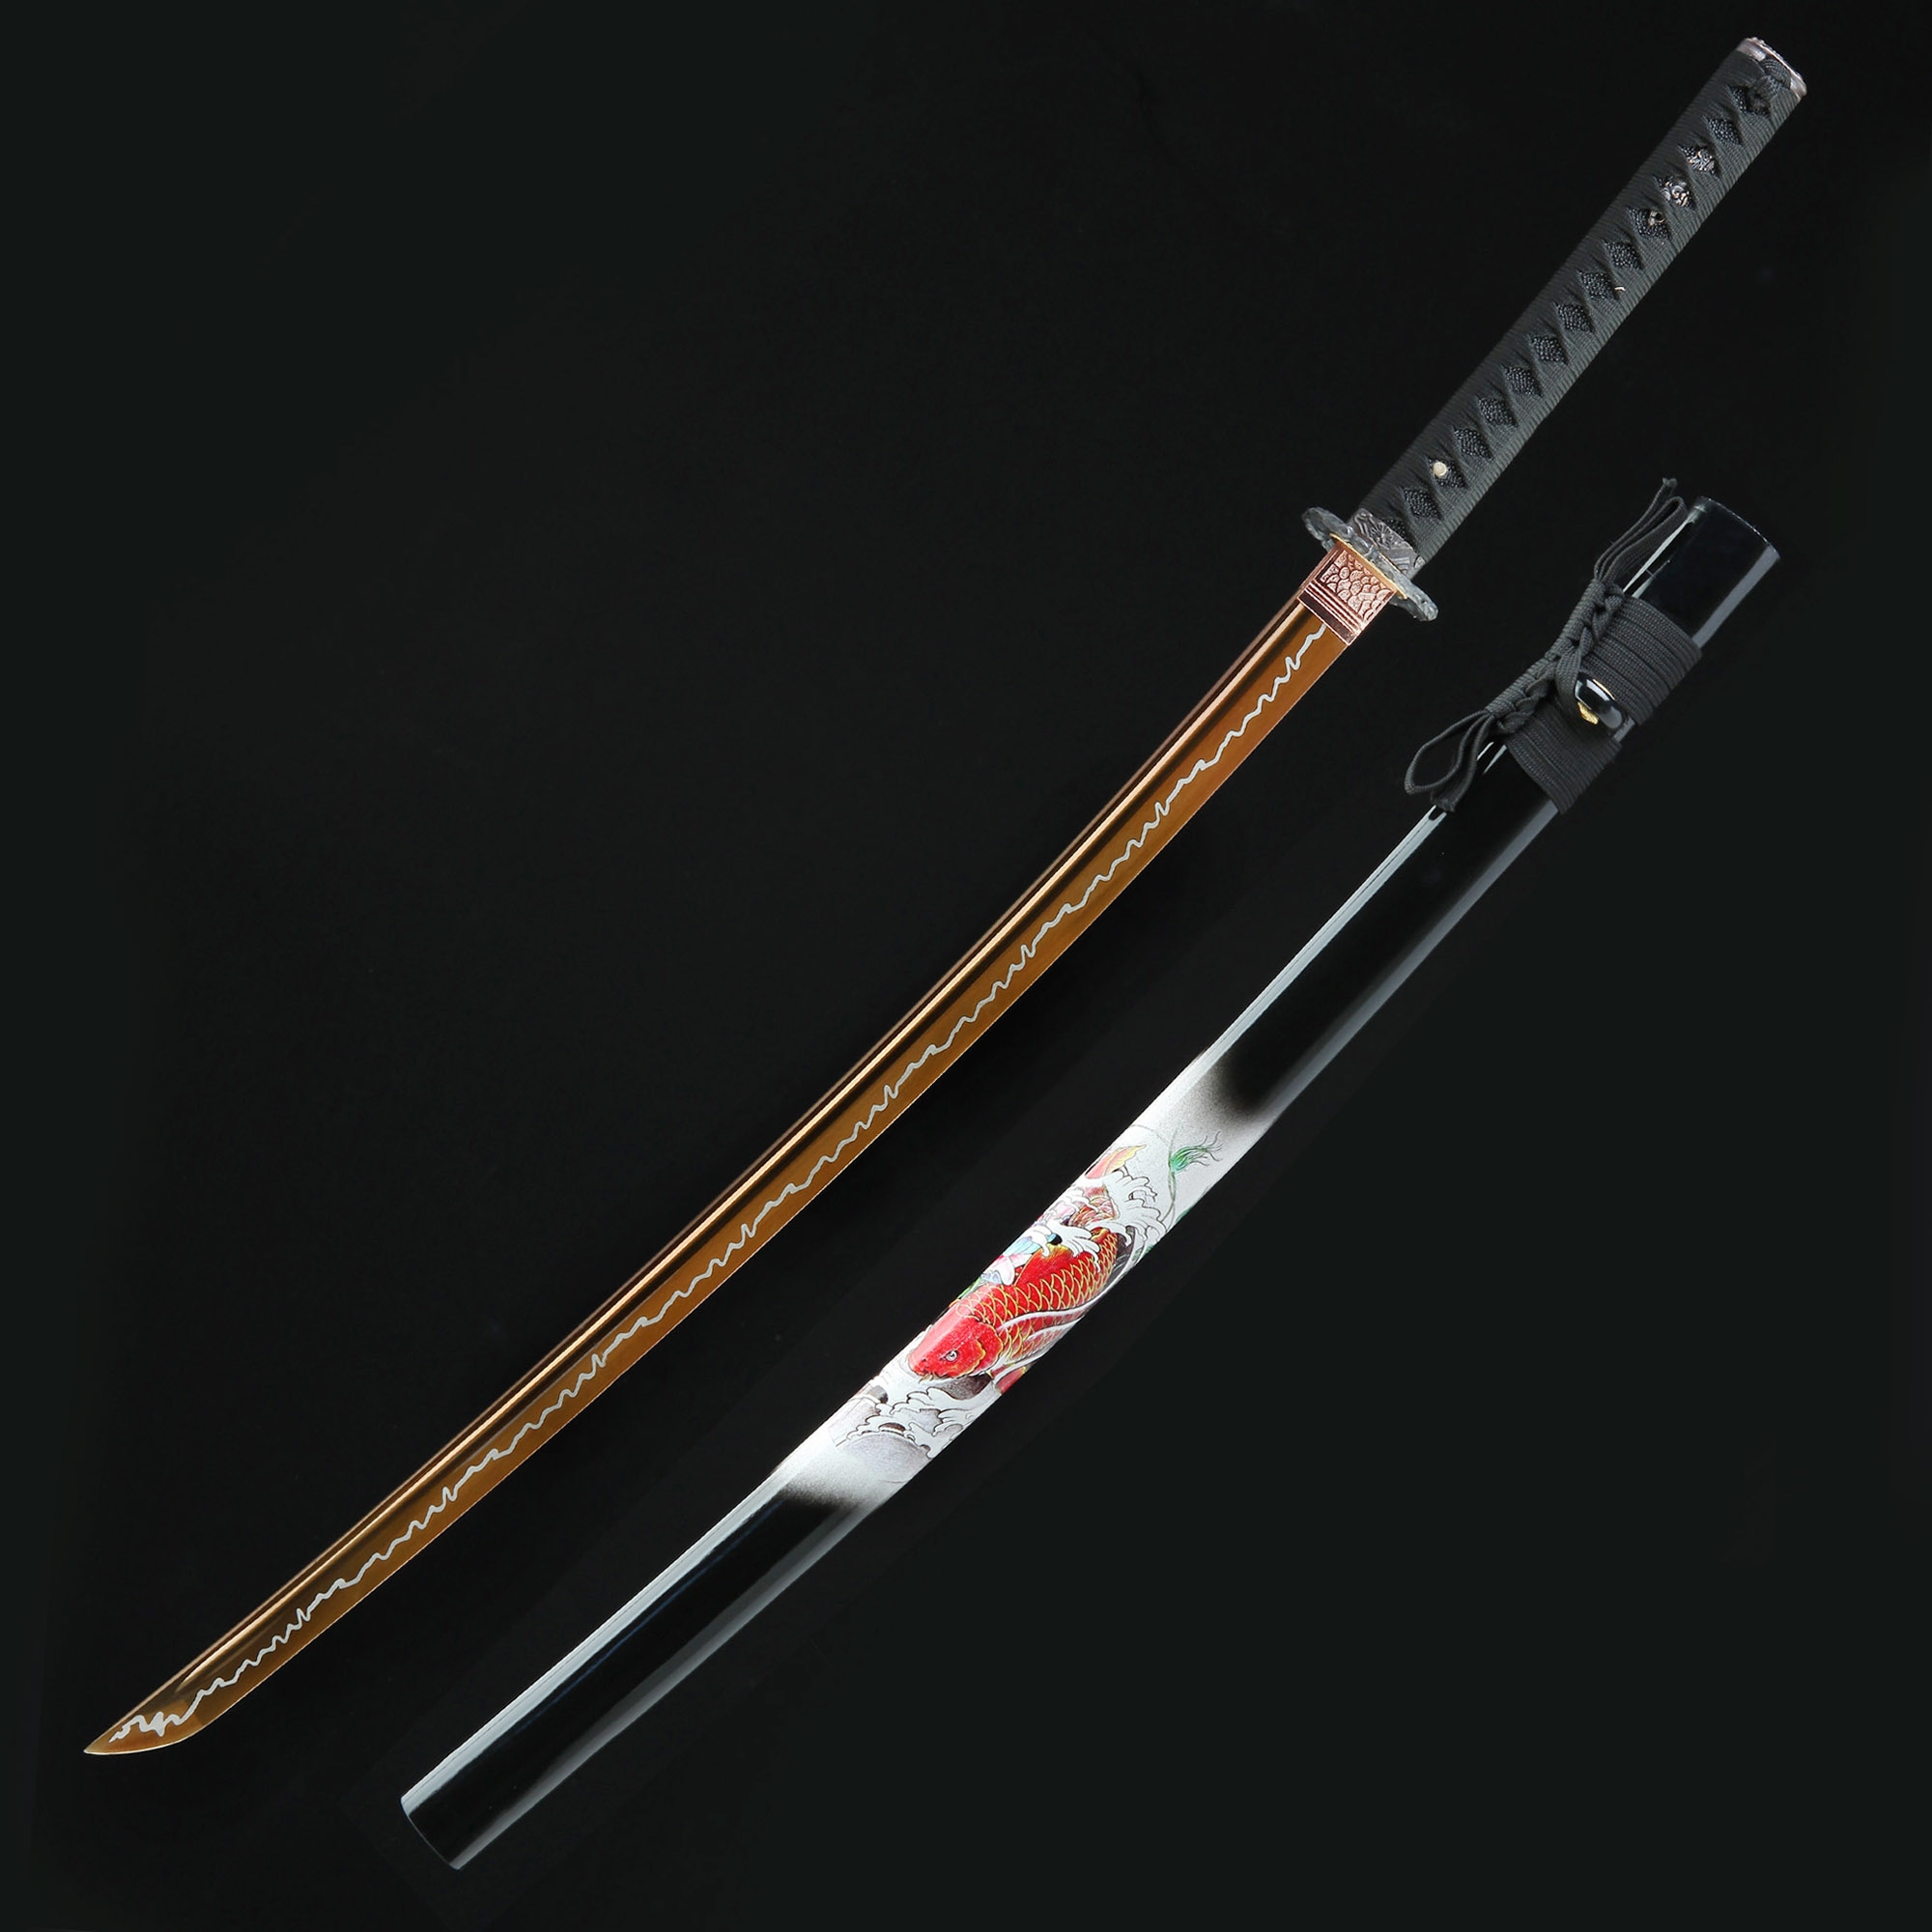 High Quality Japanese Samurai Sword Katana 1095 Steel Sharp Blade Battle Ready 